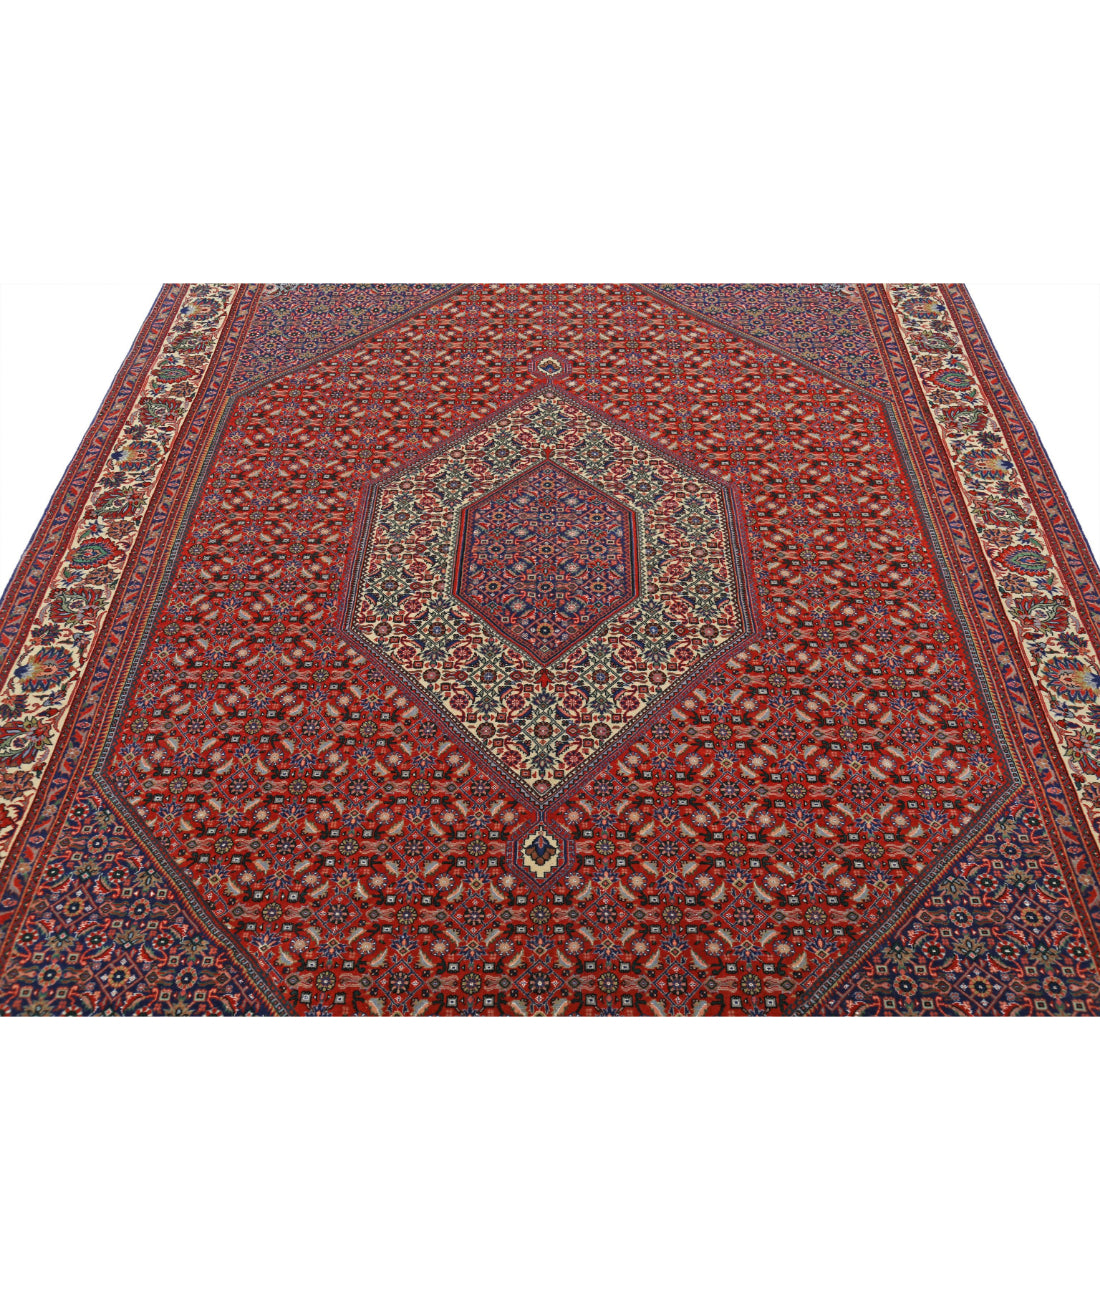 Hand Knotted Persian Bijar Wool Rug - 6'7'' x 9'11'' 6'7'' x 9'11'' (198 X 298) / Red / Ivory